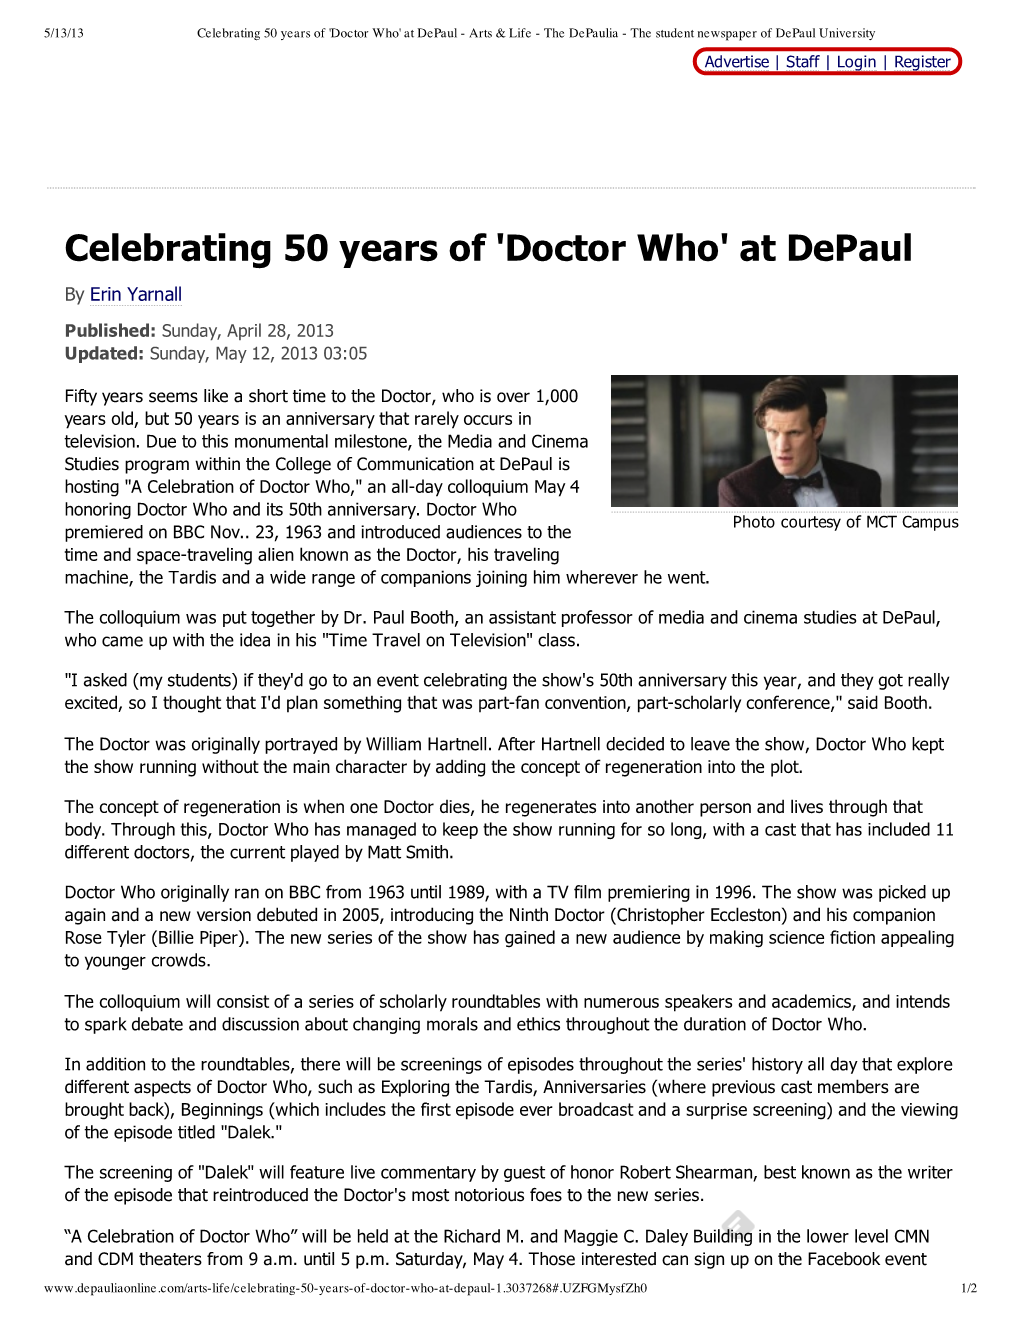 Celebrating 50 Years of 'Doctor Who' at Depaul - Arts & Life - the Depaulia - the Student Newspaper of Depaul University Advertise | Staff | Login | Register